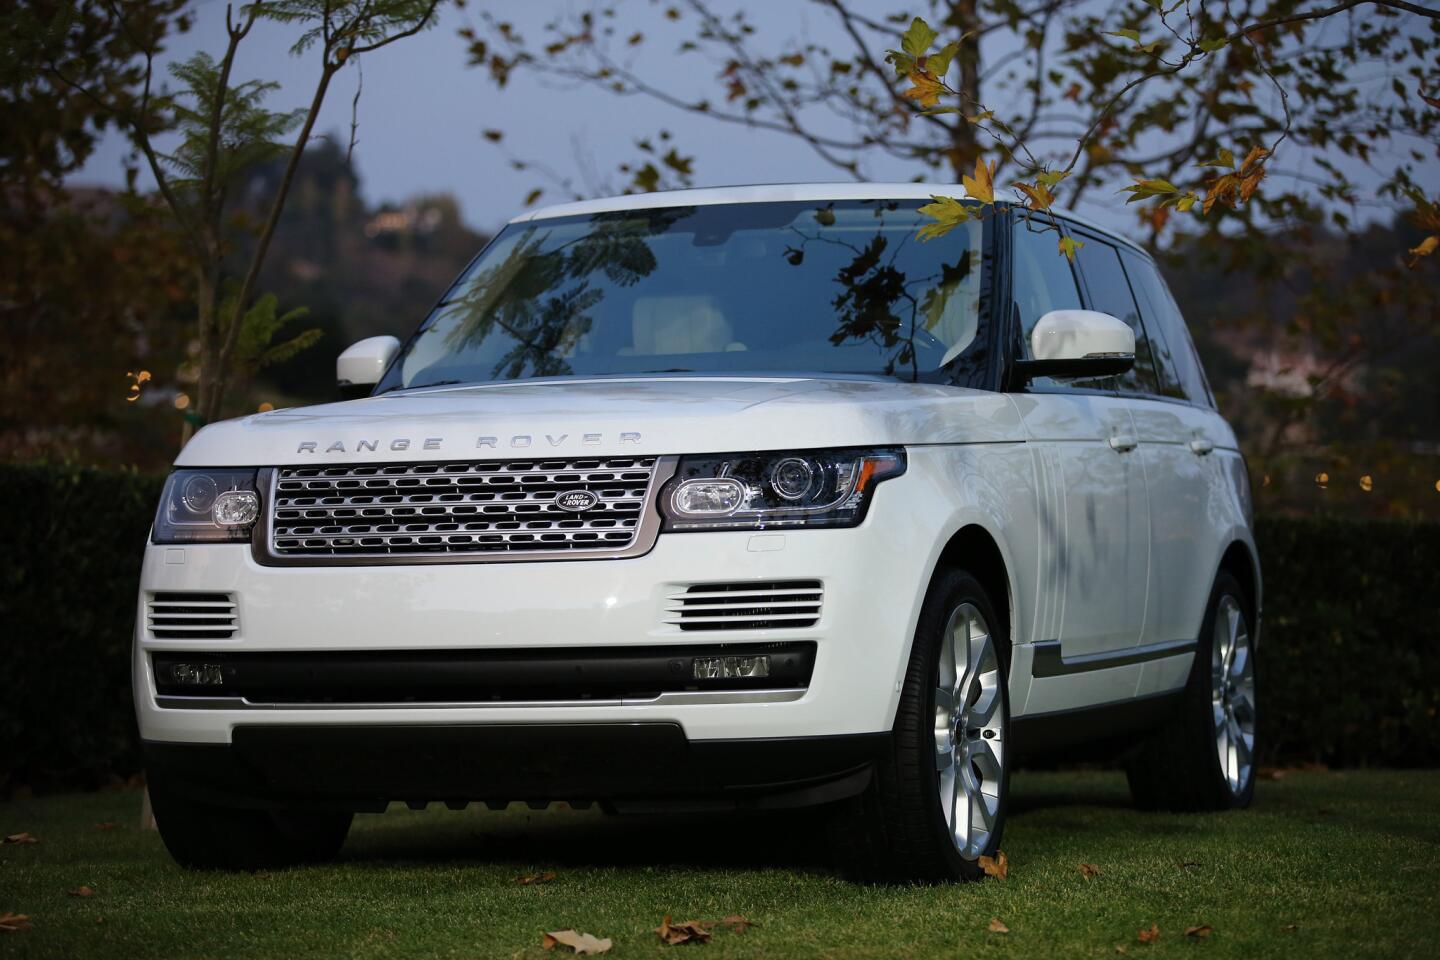 Range Rover Autobiography Black exclusive reveal